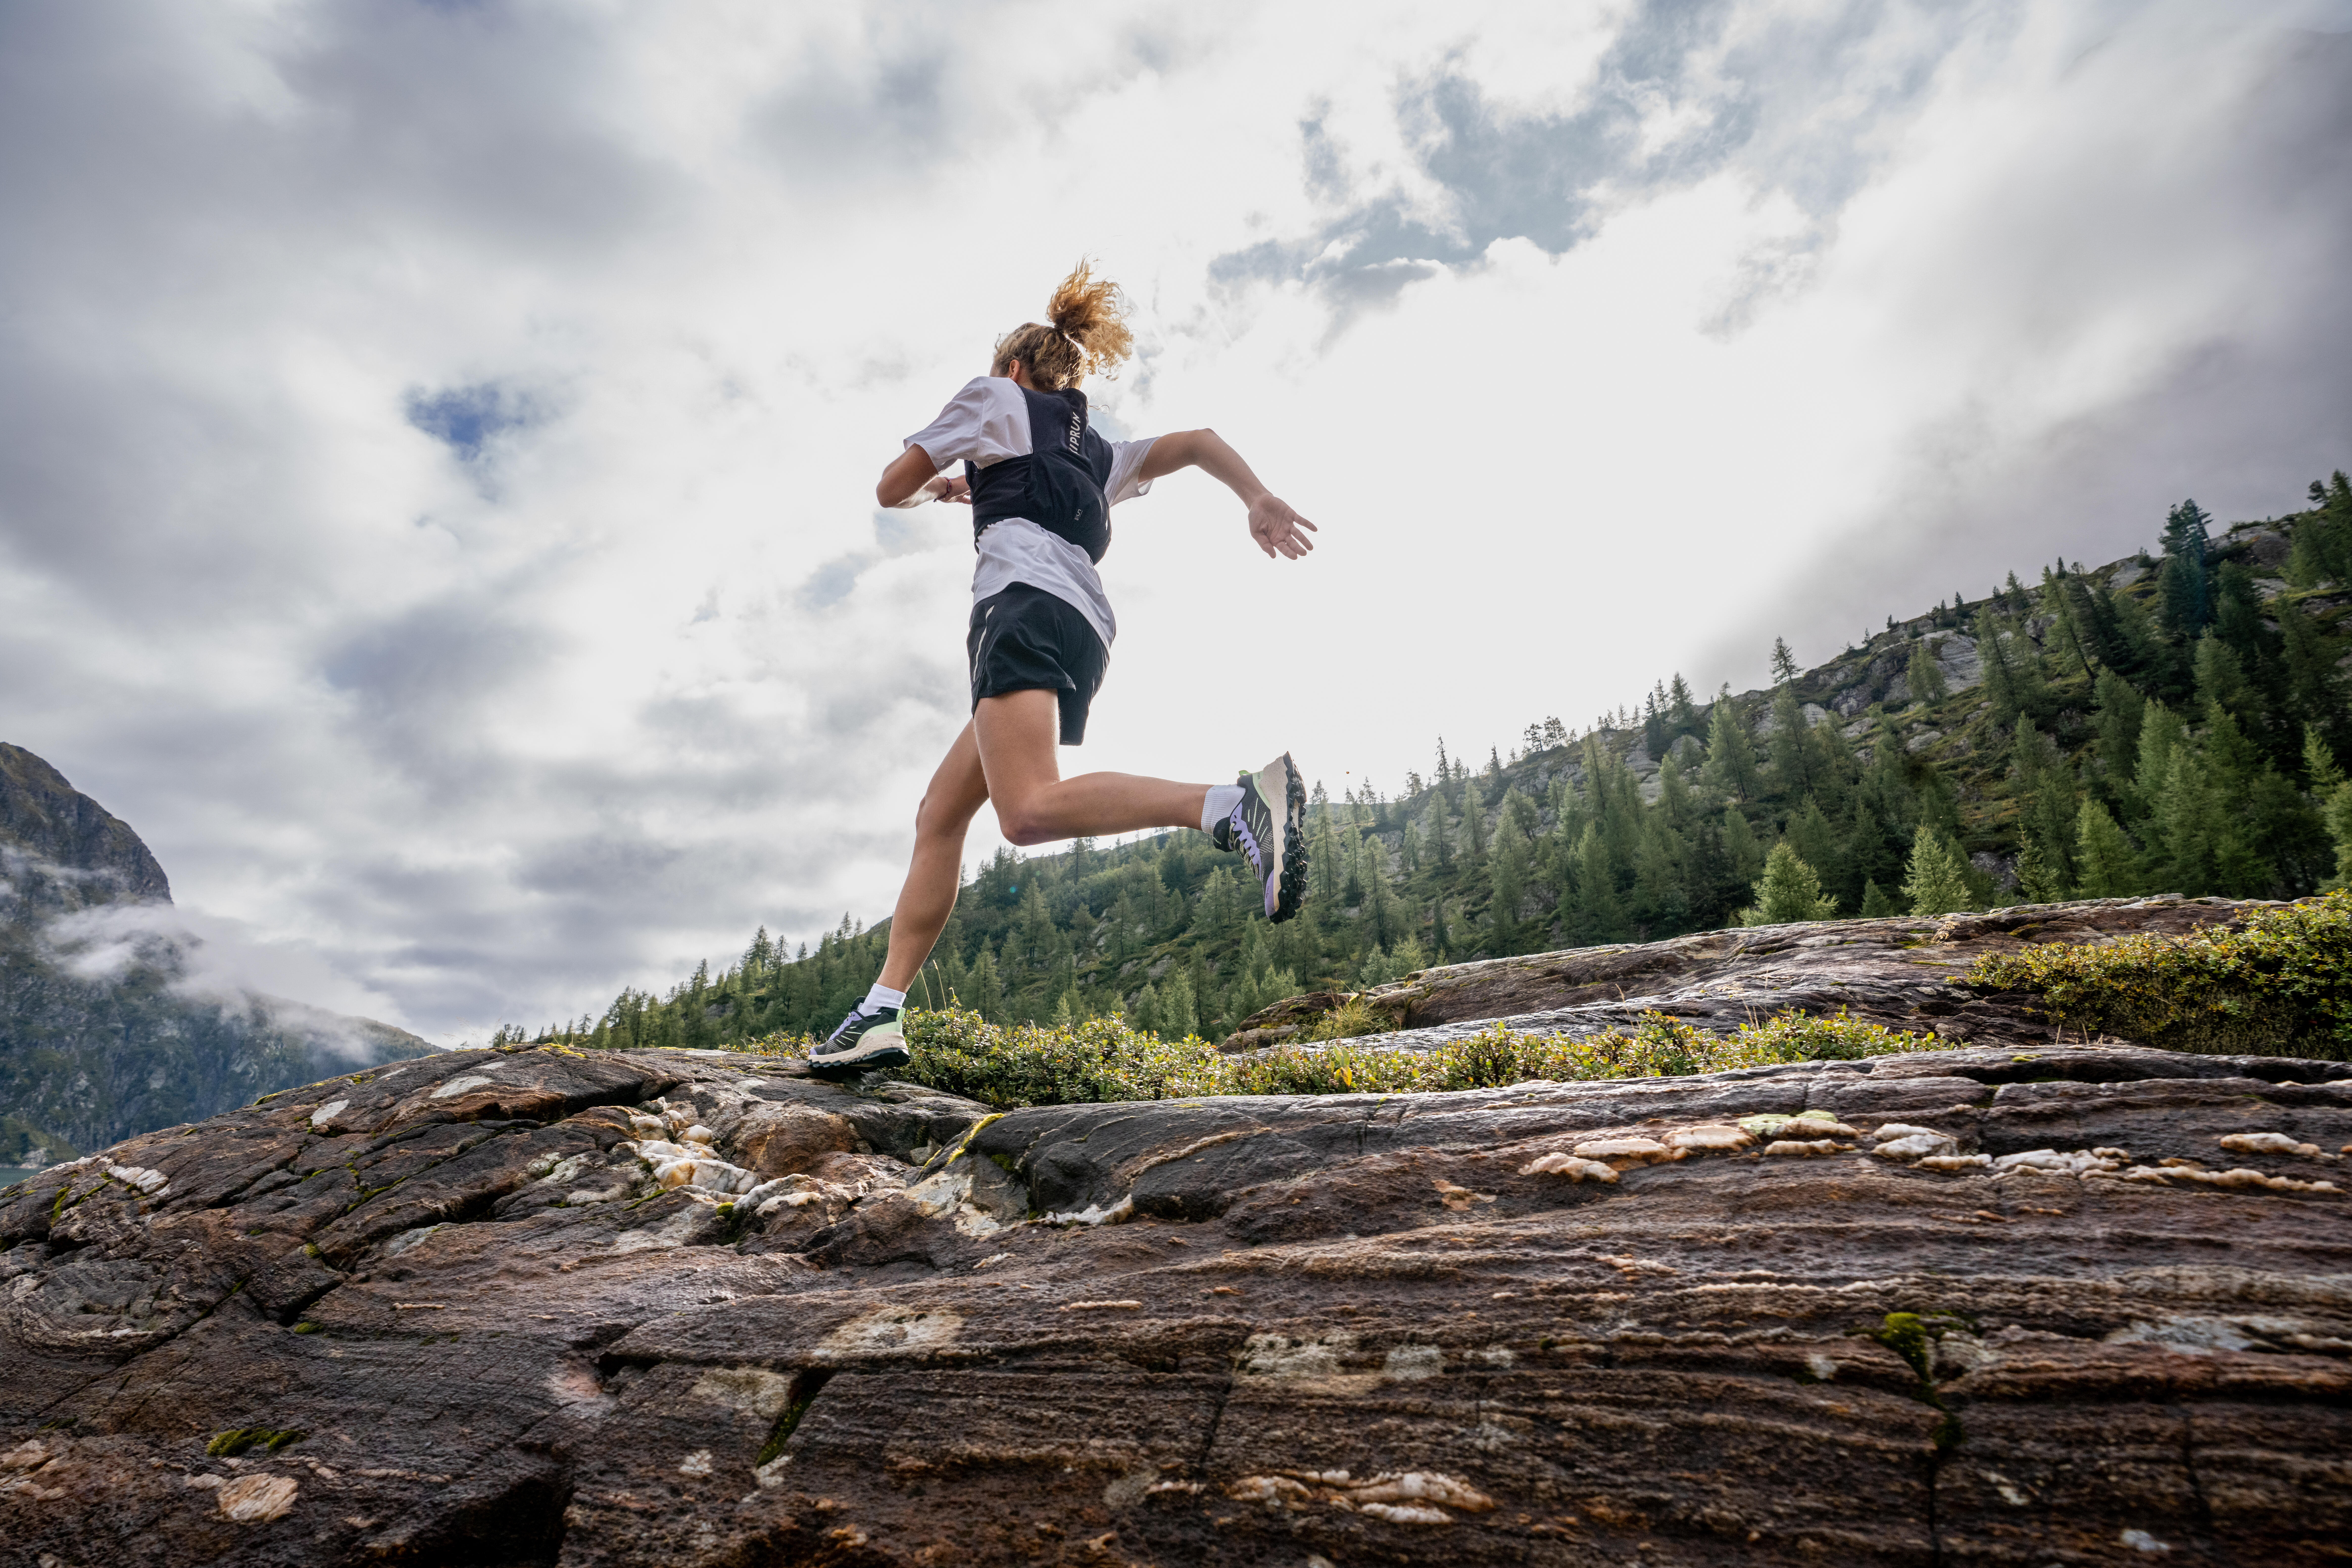 Women - Trail Running Short - Shorts